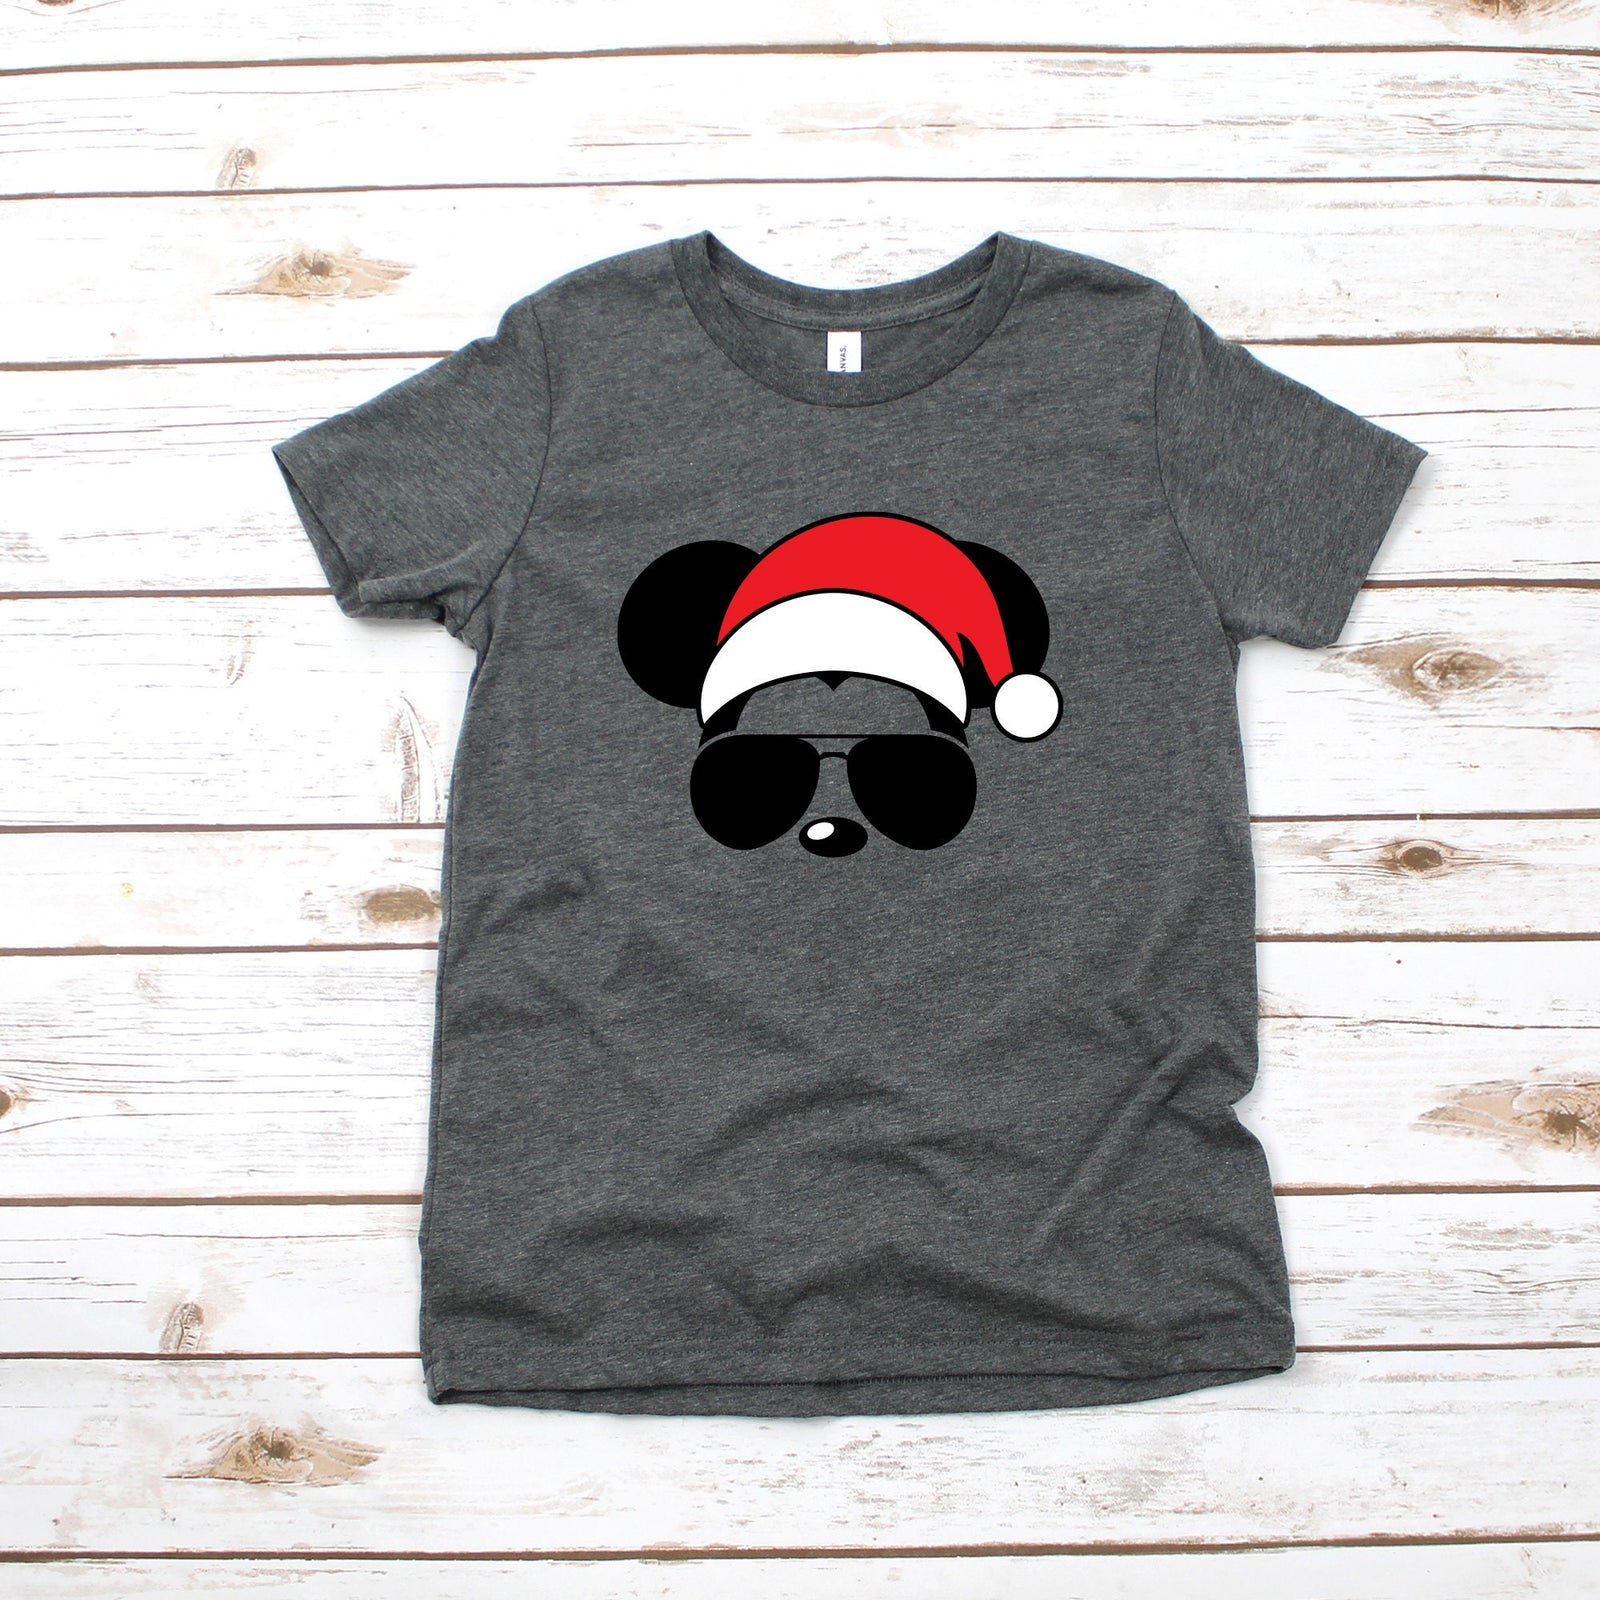 Santa Mickey Mouse - Aviator Sunglasses - Infant Toddler Youth Mickey Shirt - Disney Kids Shirts - Christmas Holiday Shirt